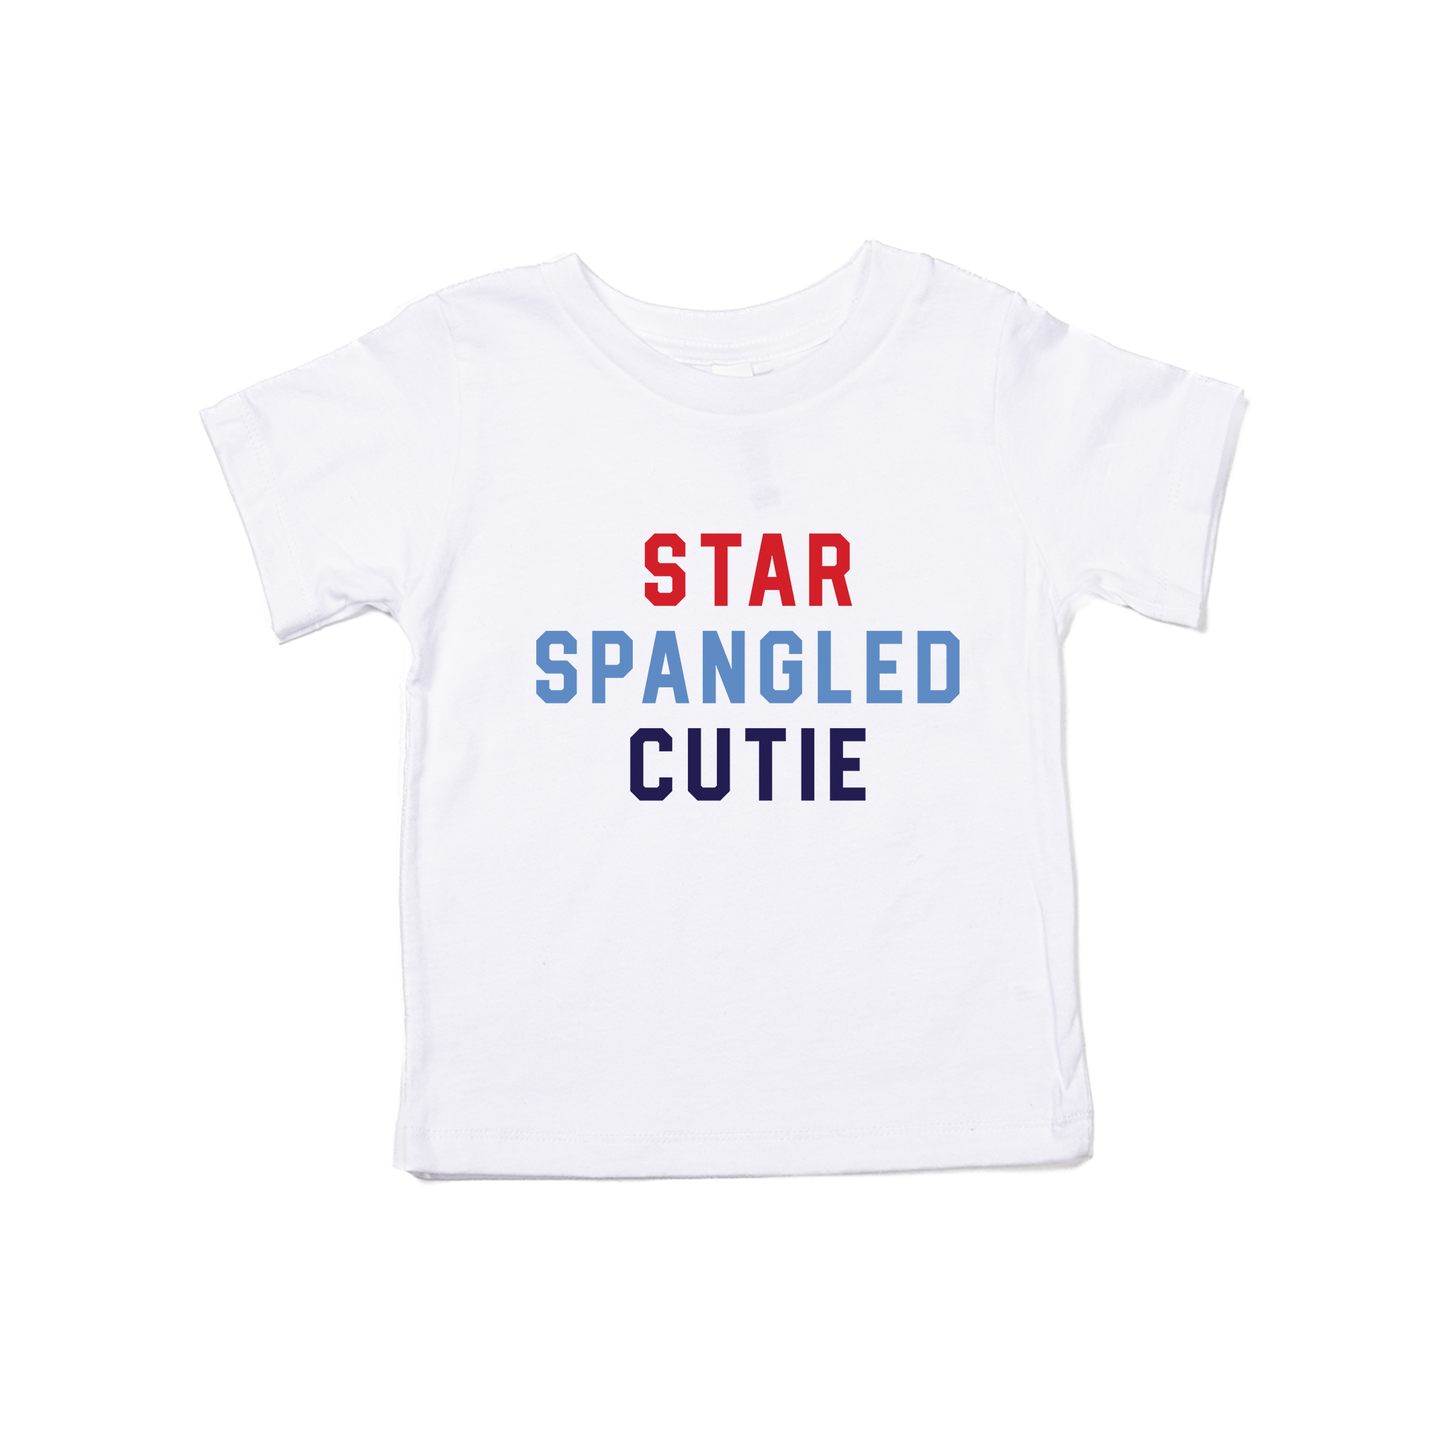 Star Spangled Cutie - Kids Tee (White)